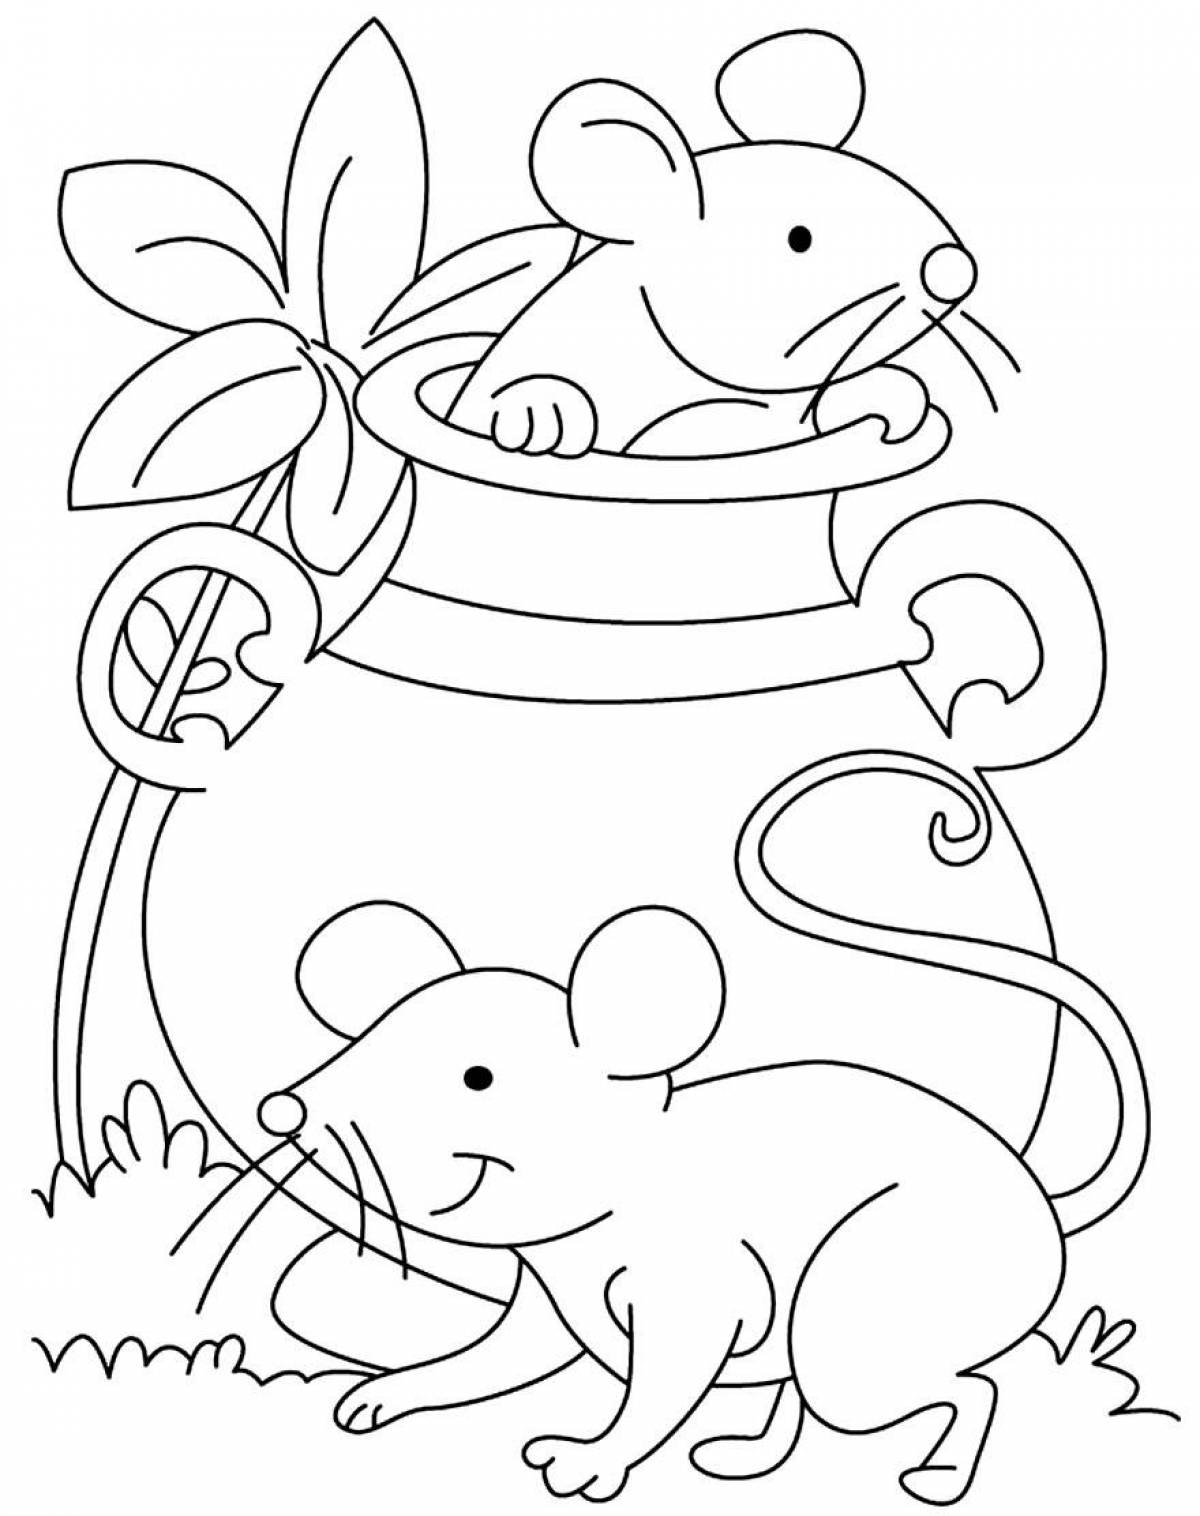 Изысканная раскраска мышь для детей